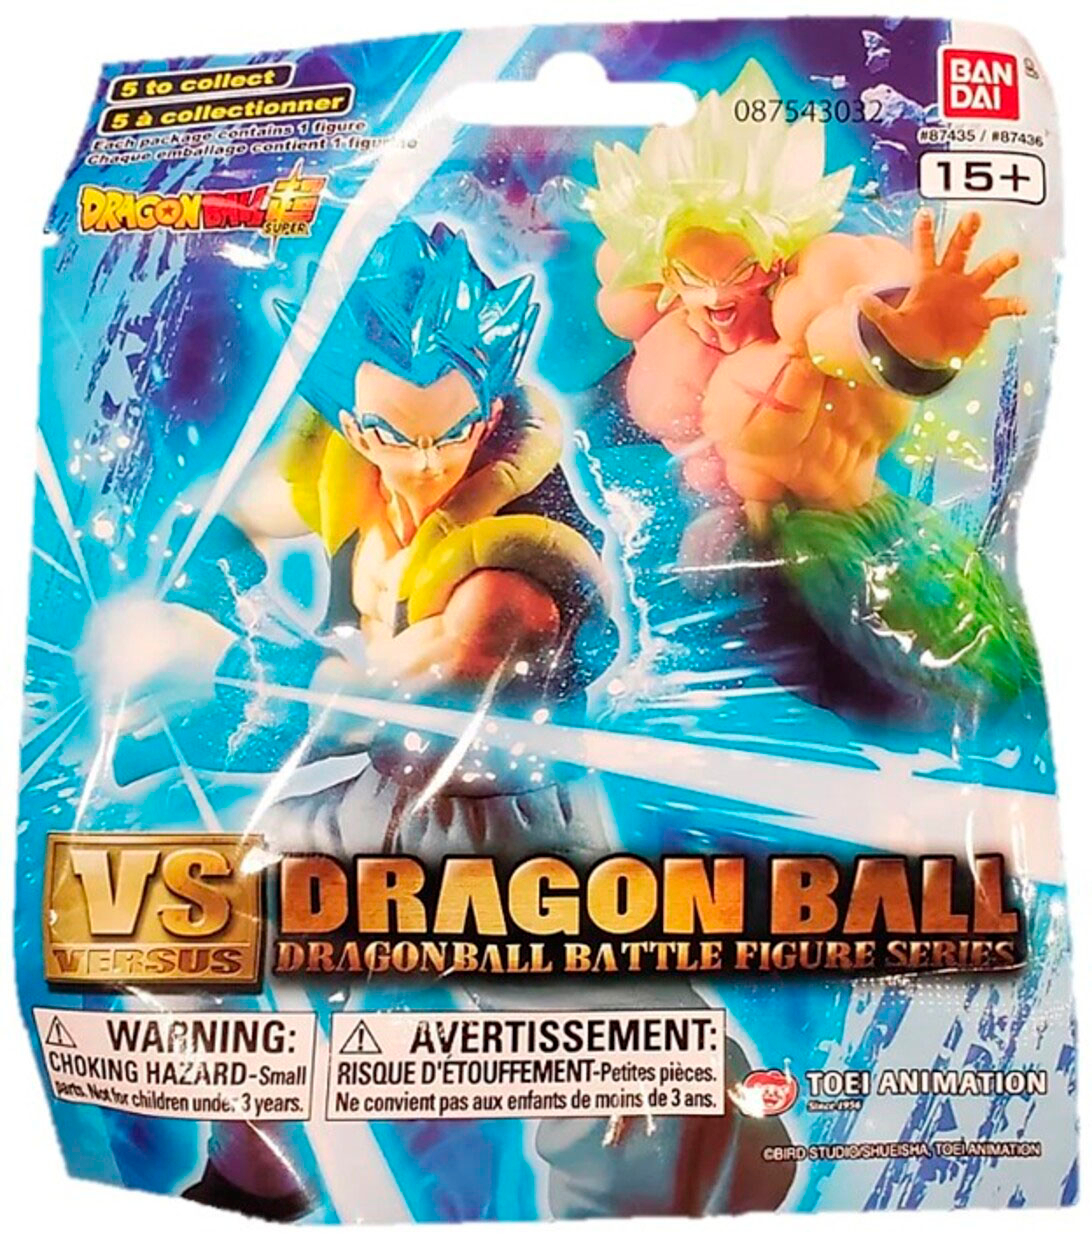 Bandai Dragon Ball Super Dragon Stars Power Up Pack  - Best Buy